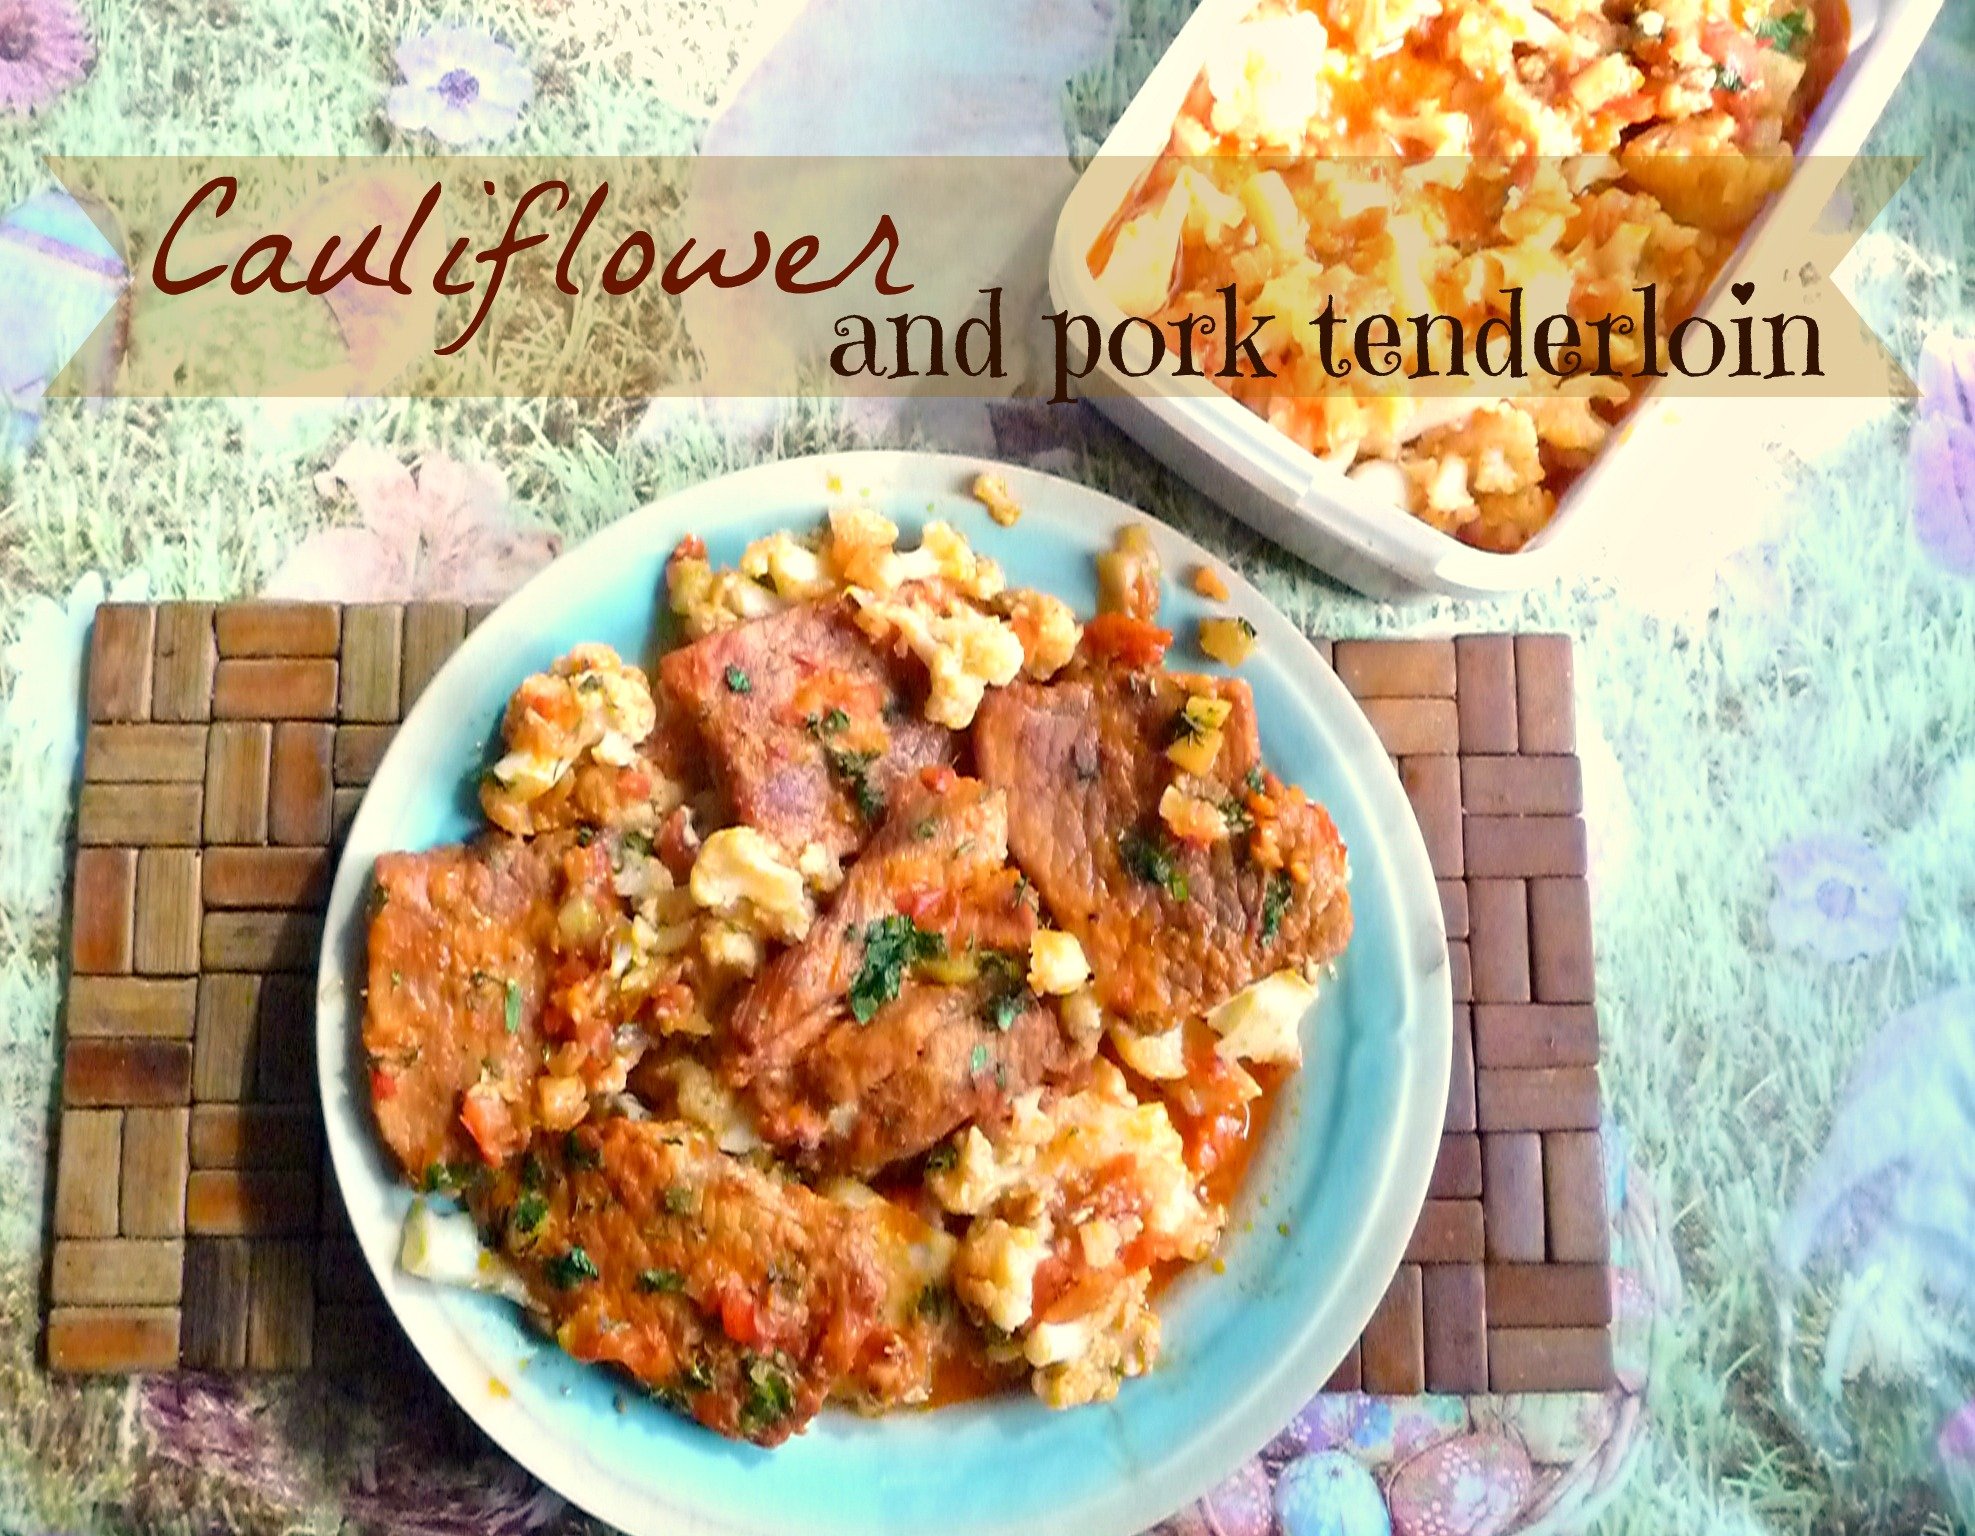 How to make your pork and cauliflower recipe taste like a million bucks